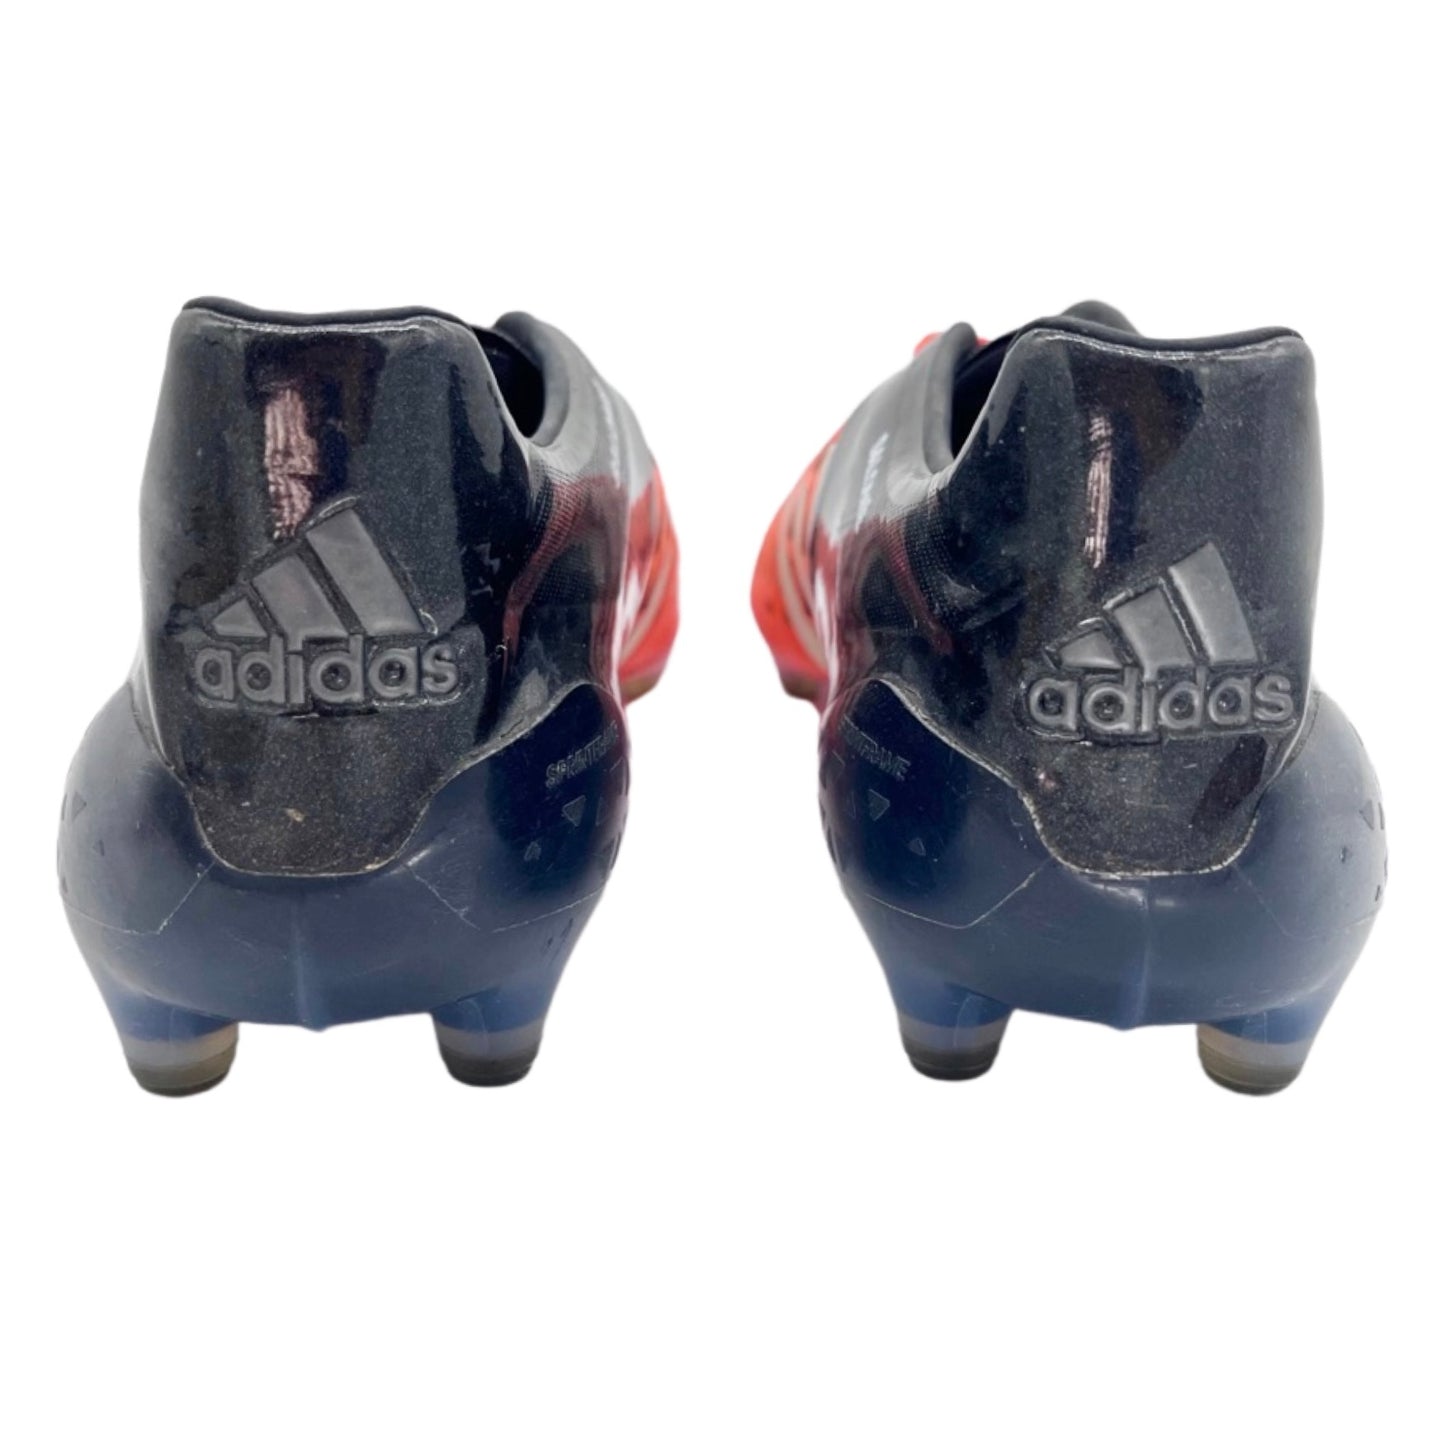 James Rodriguez Match Worn Adidas Ace 15.1 Assinado